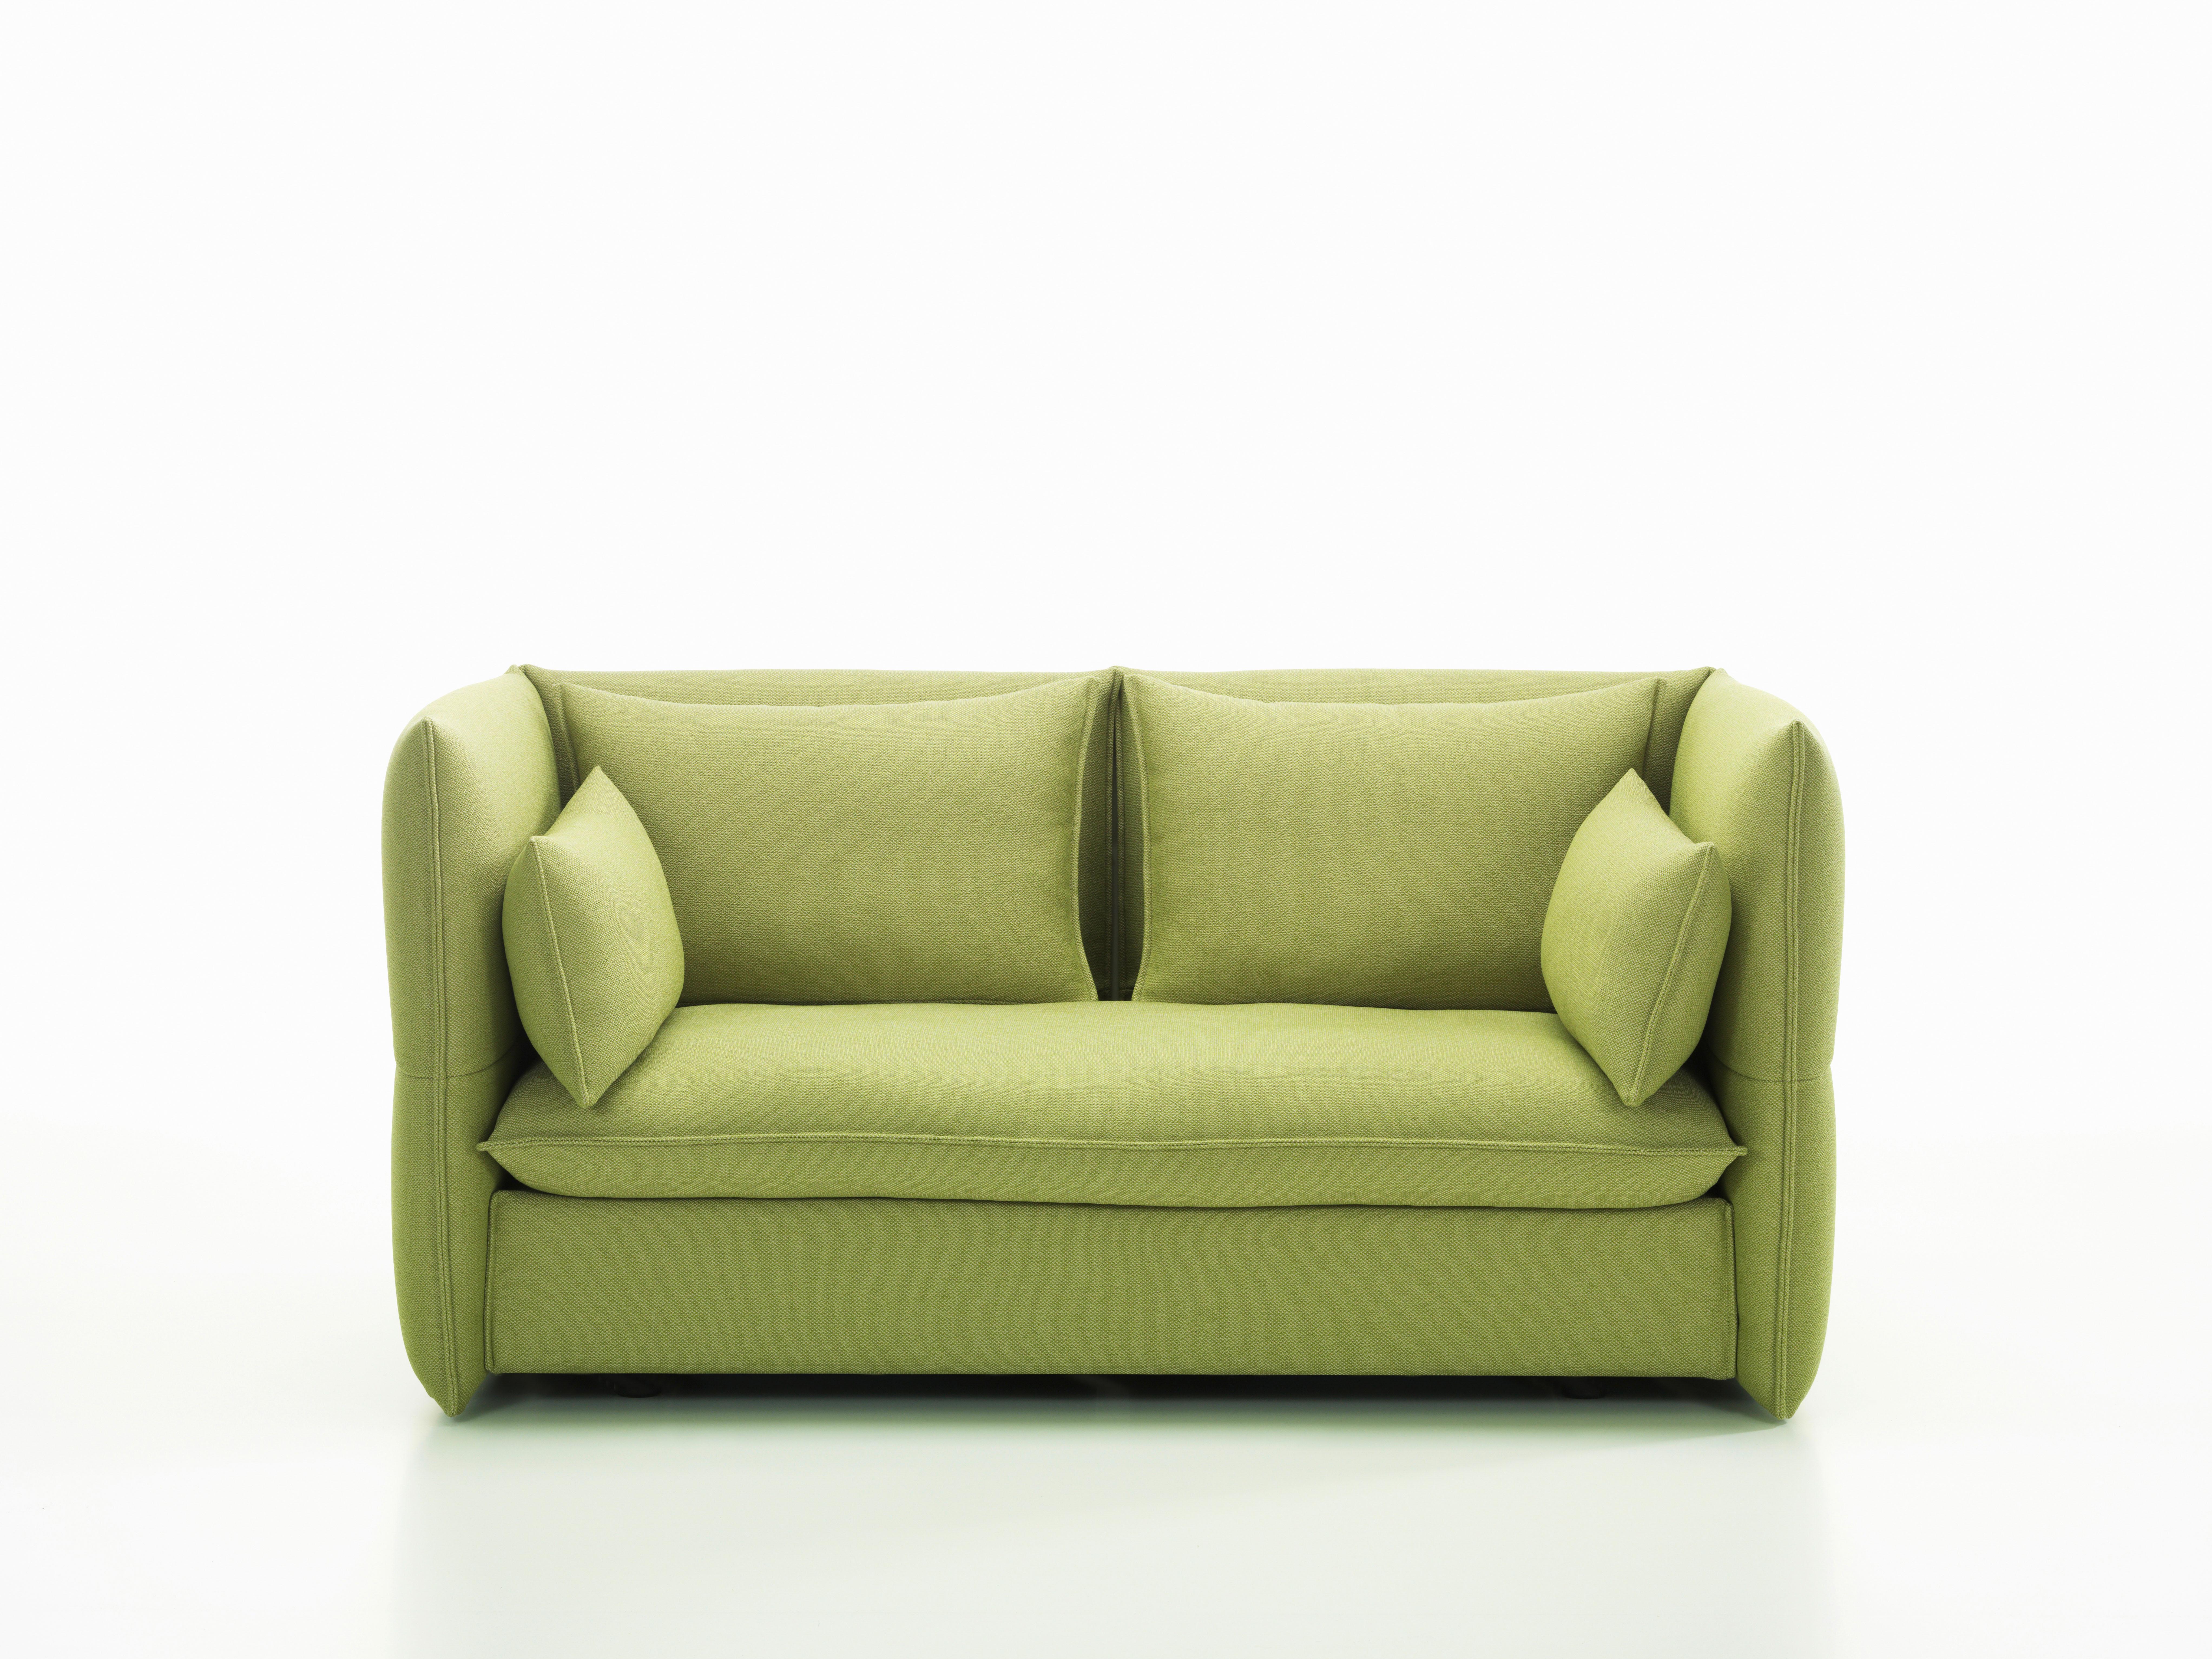 Vitra Mariposa 2-Seat Sofa in Sand & Avocado Credo by Edward Barber & Jay For Sale 1